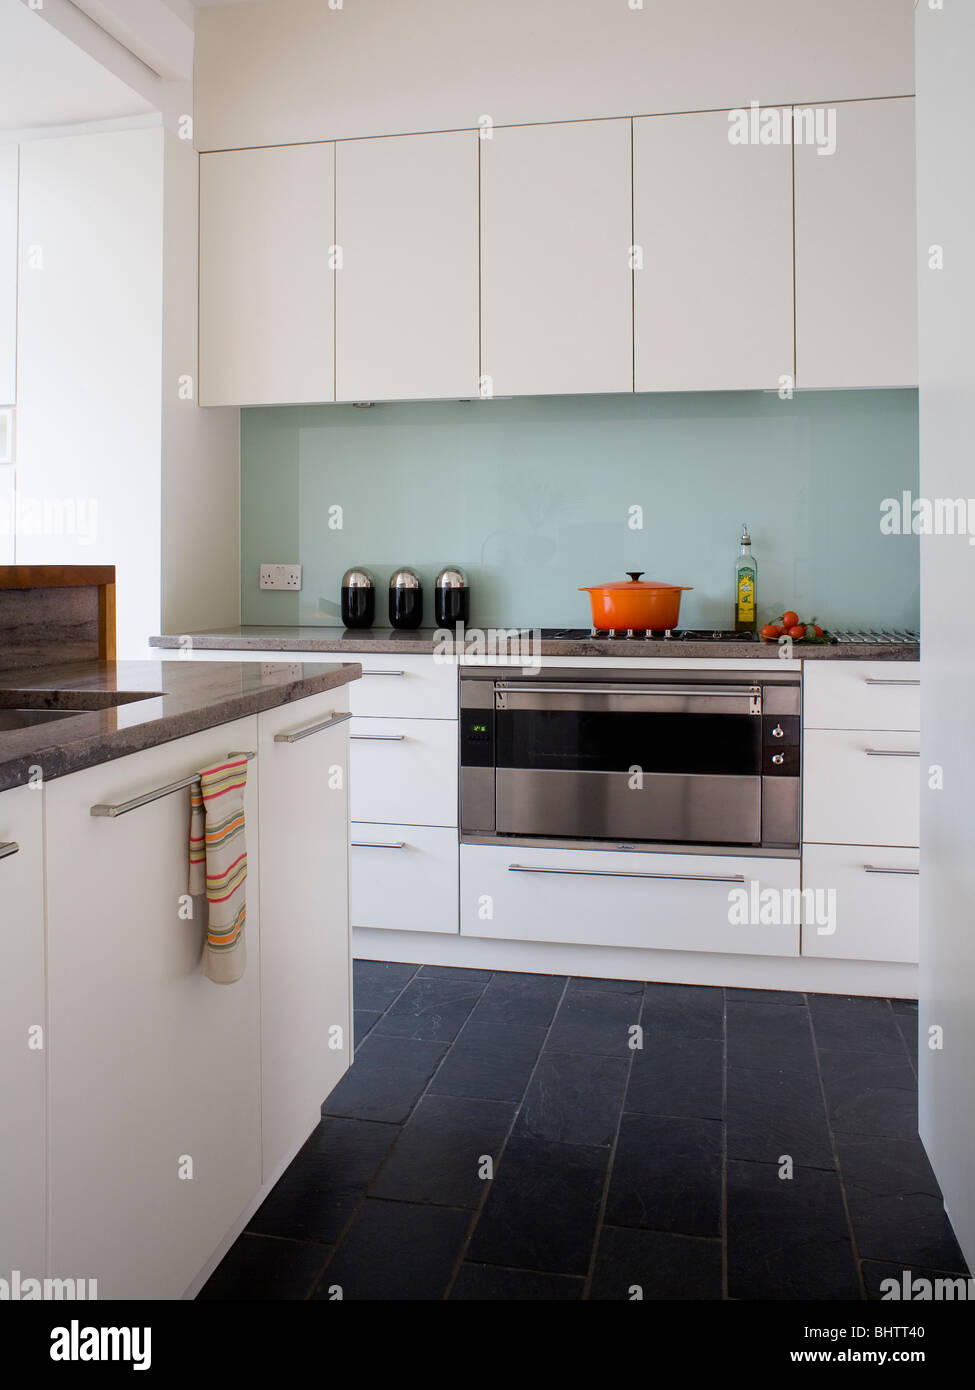 Black Floor Tiles In Modern White Kitchen With Glass Splash Back Stock Photo Alamy